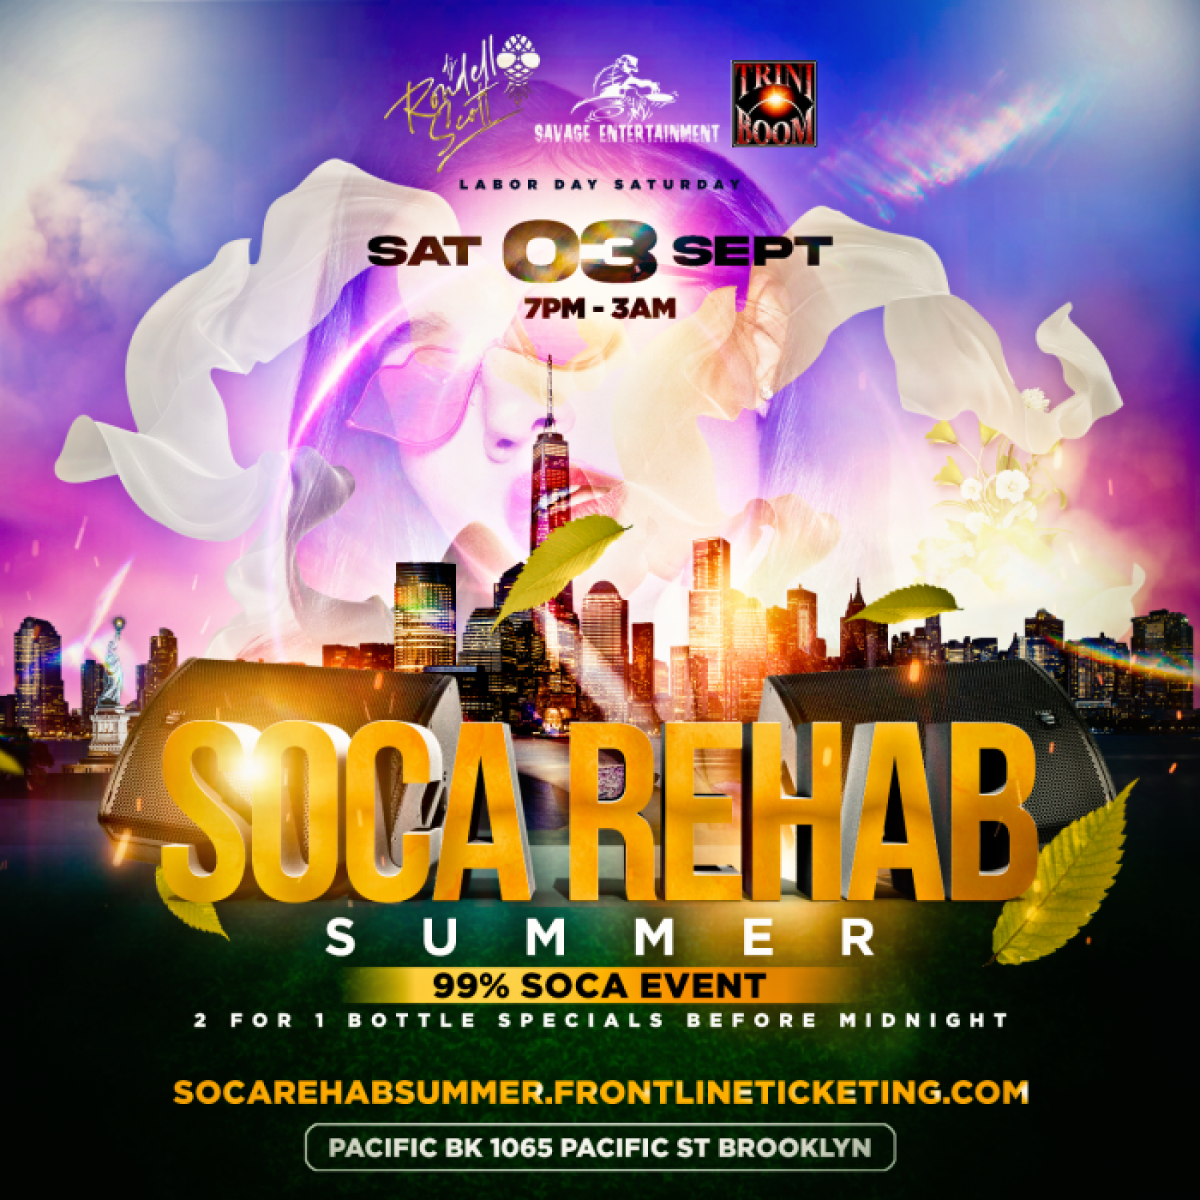 Soca Rehab Summer flyer or graphic.